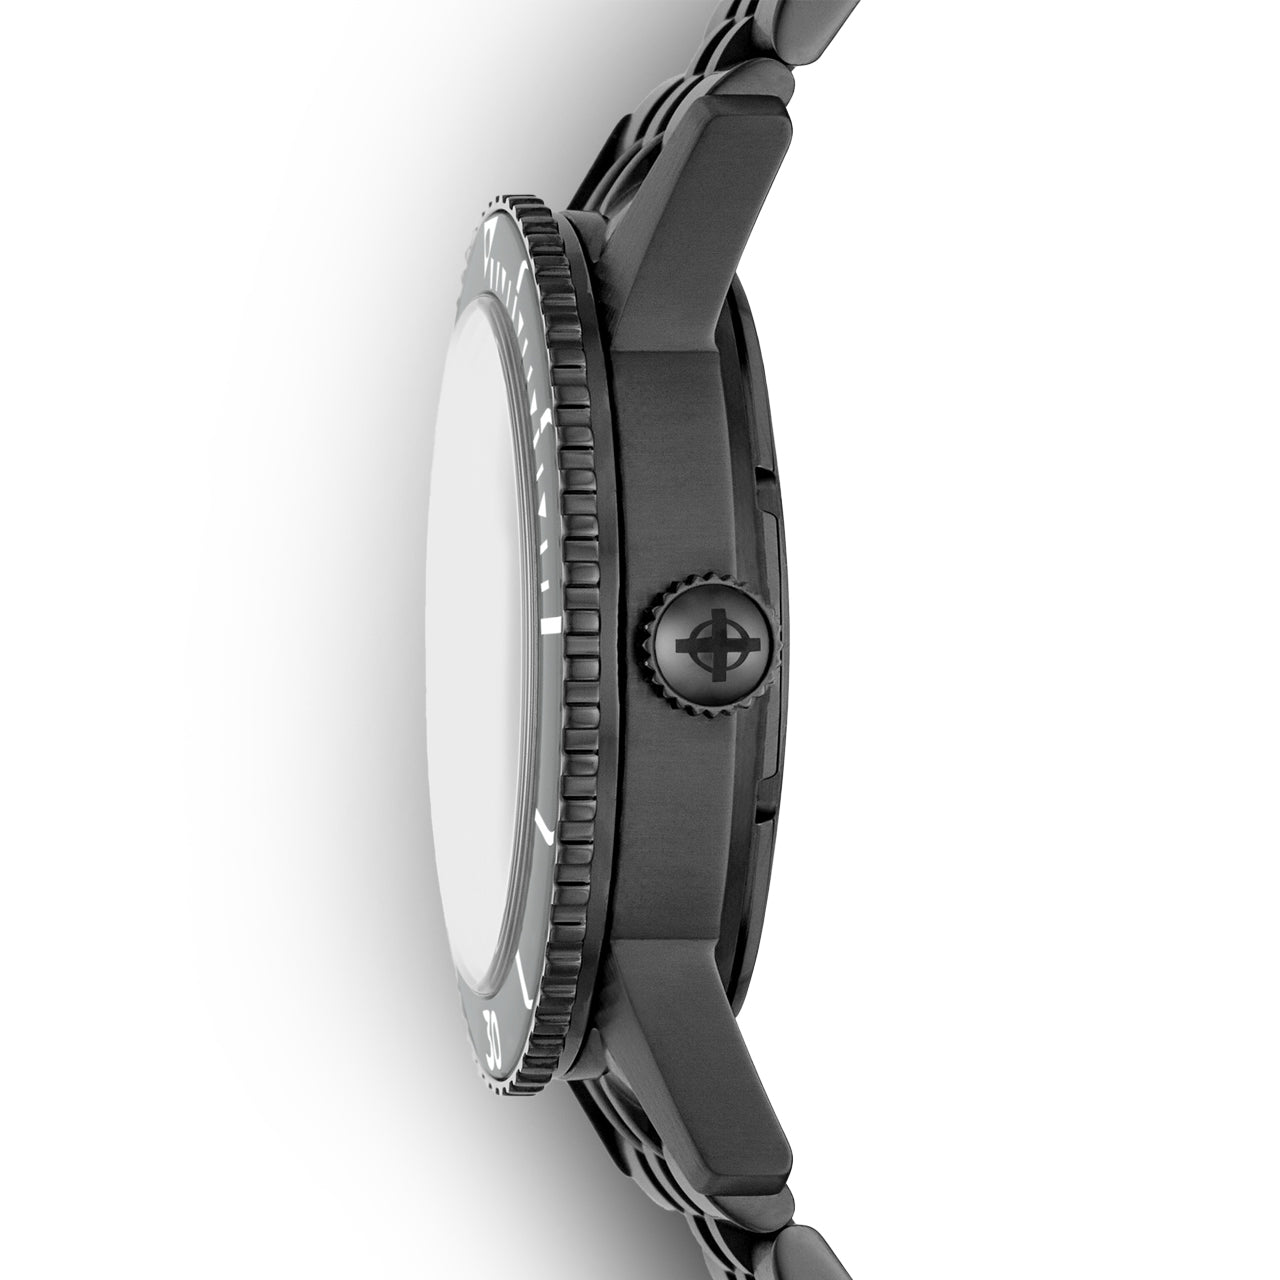 Zodiac Super Sea Wolf Meteorite Limited Edition Watch